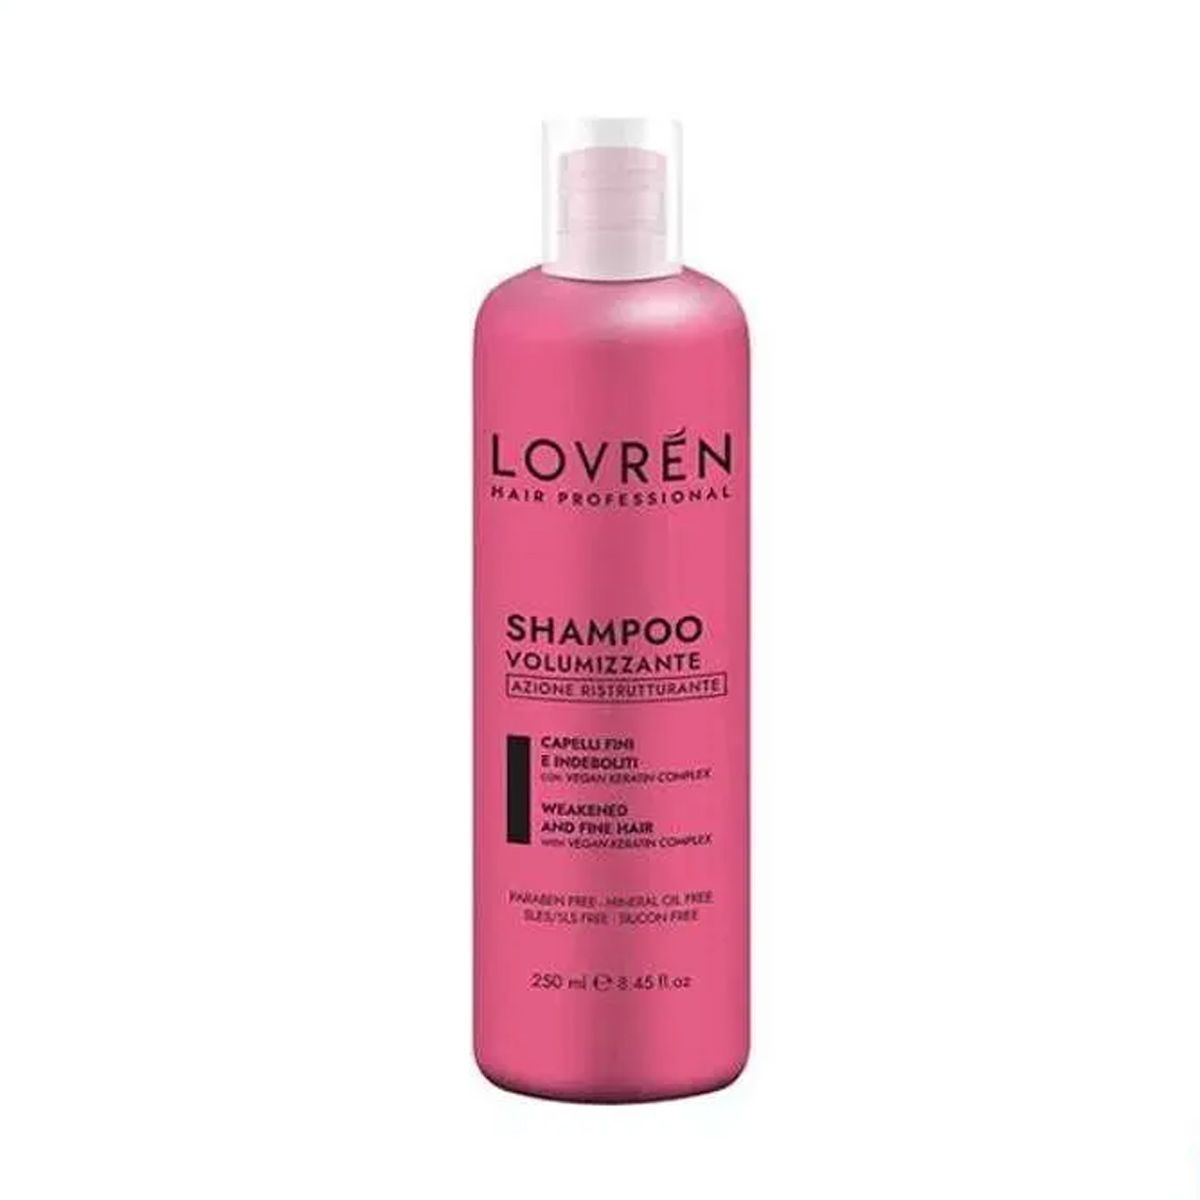 Lovren Hair Professional Shampoo Volumizzante 250ml